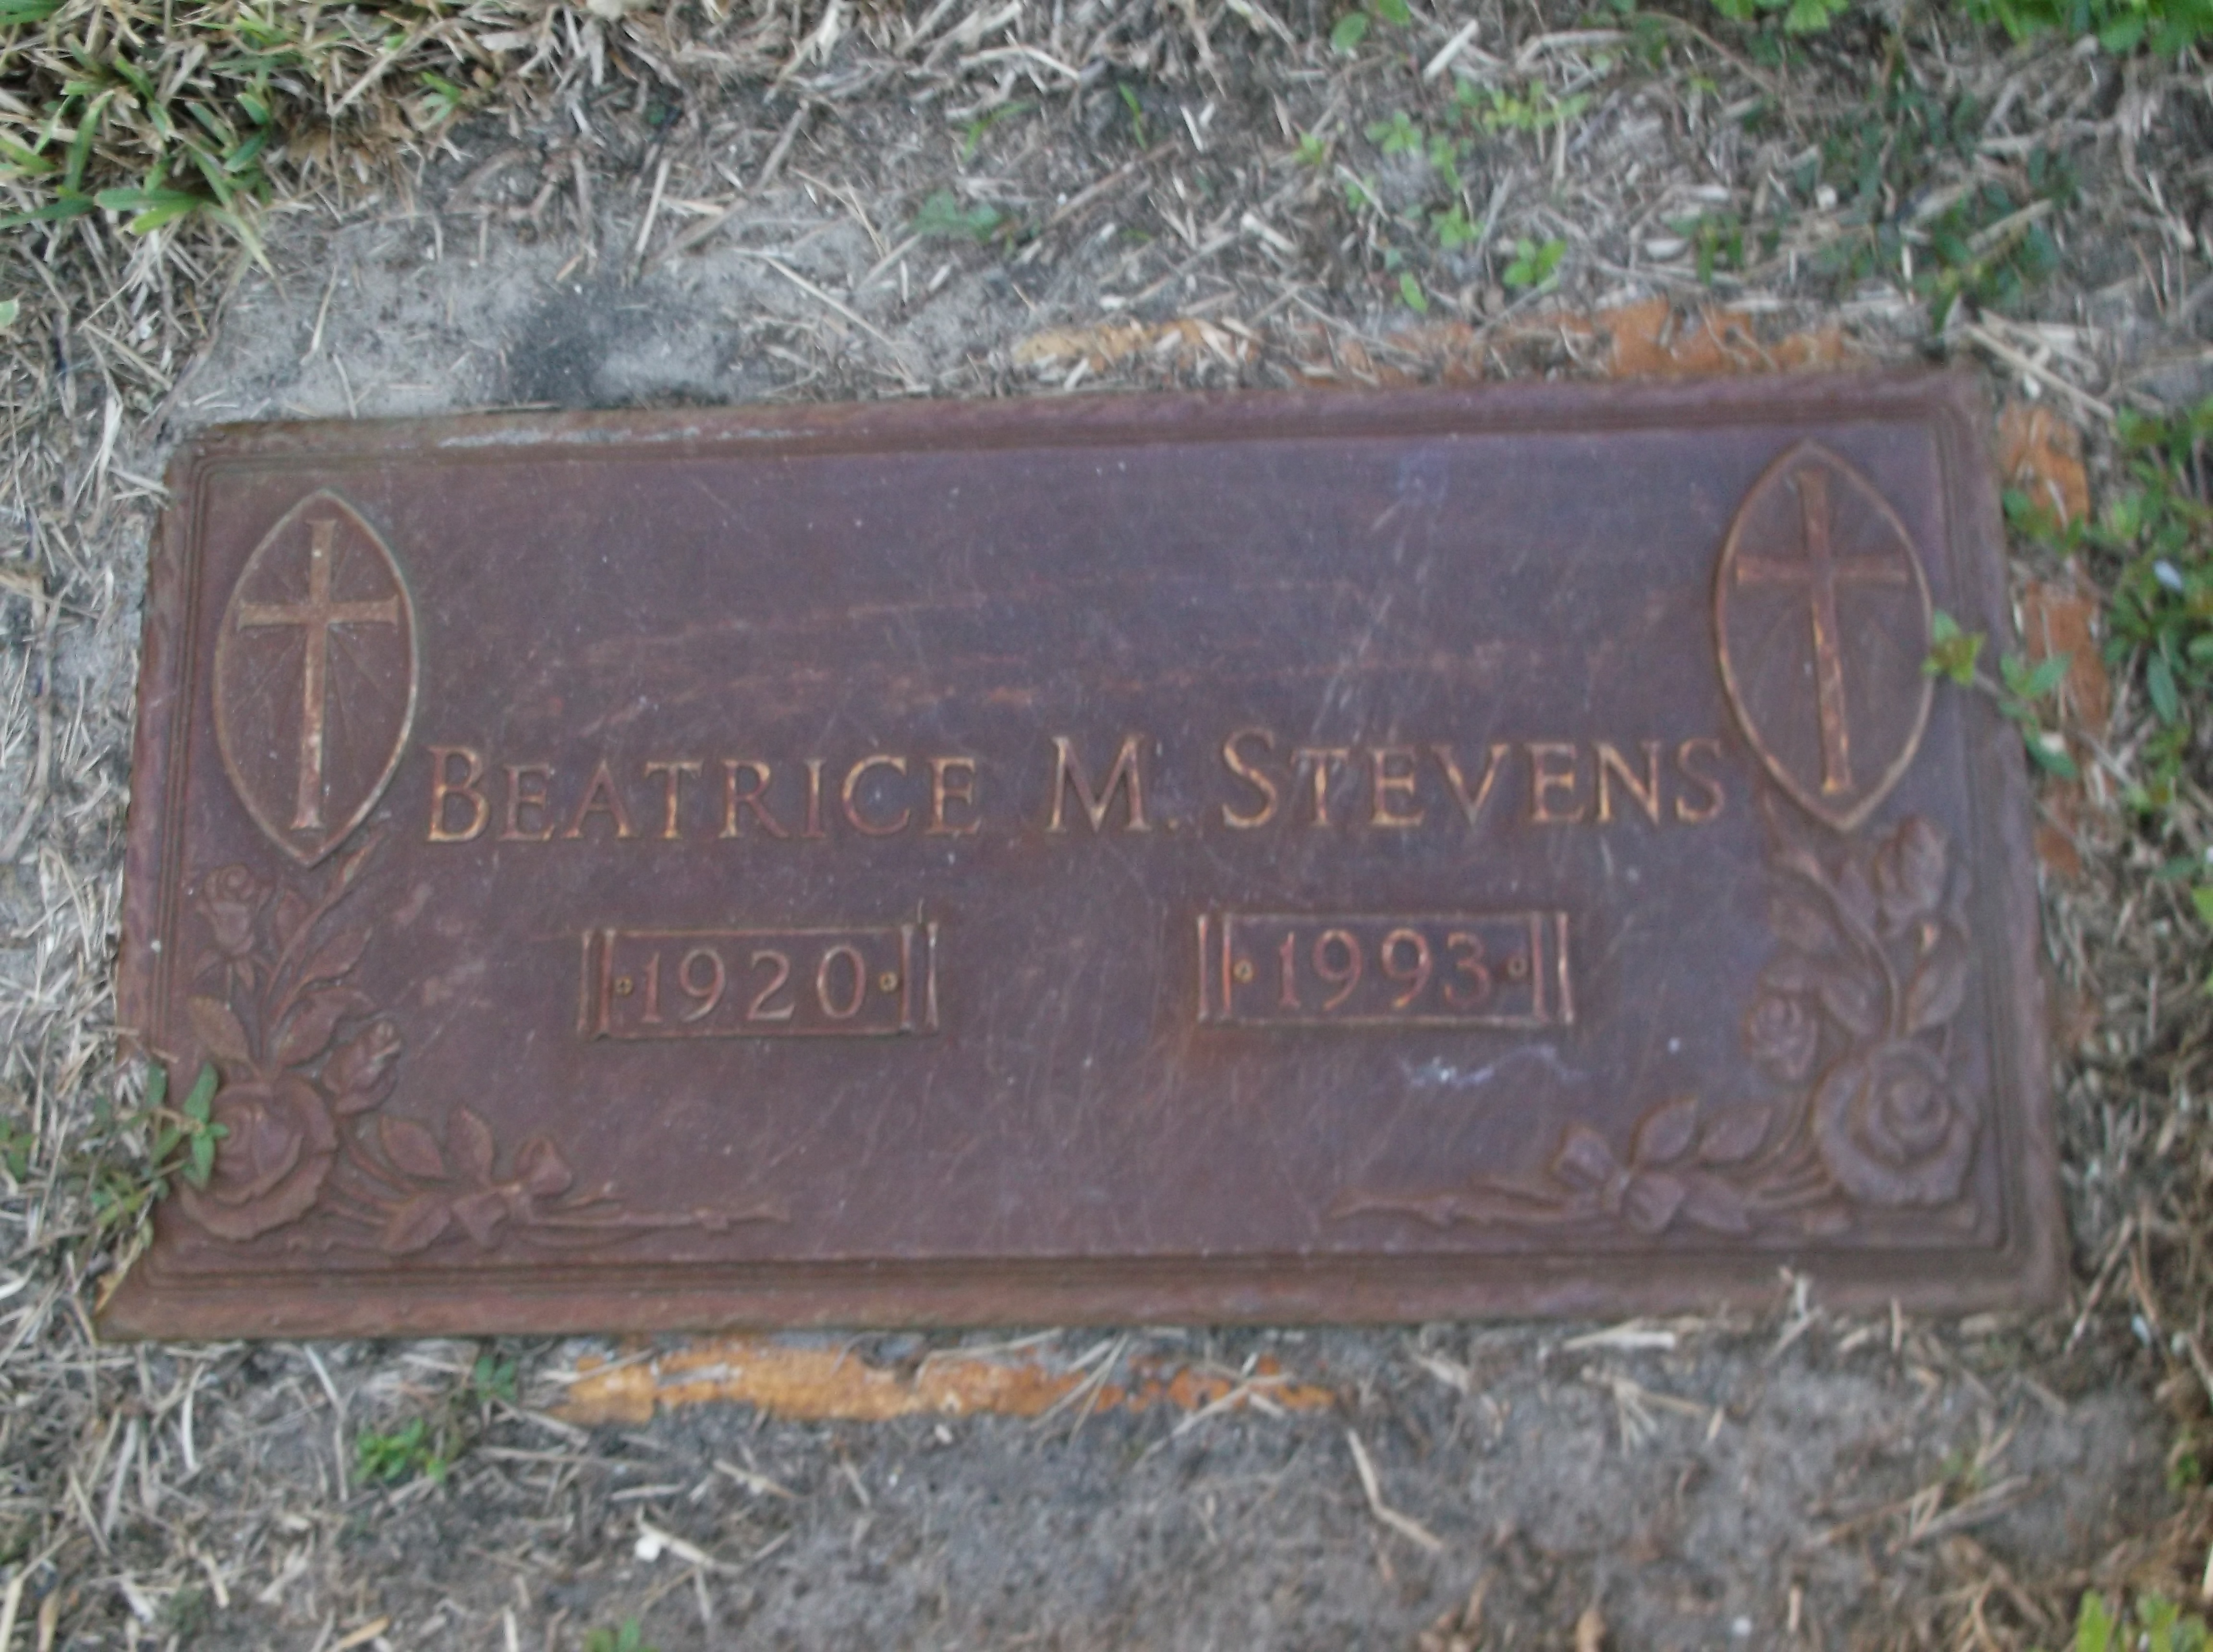 Beatrice M Stevens